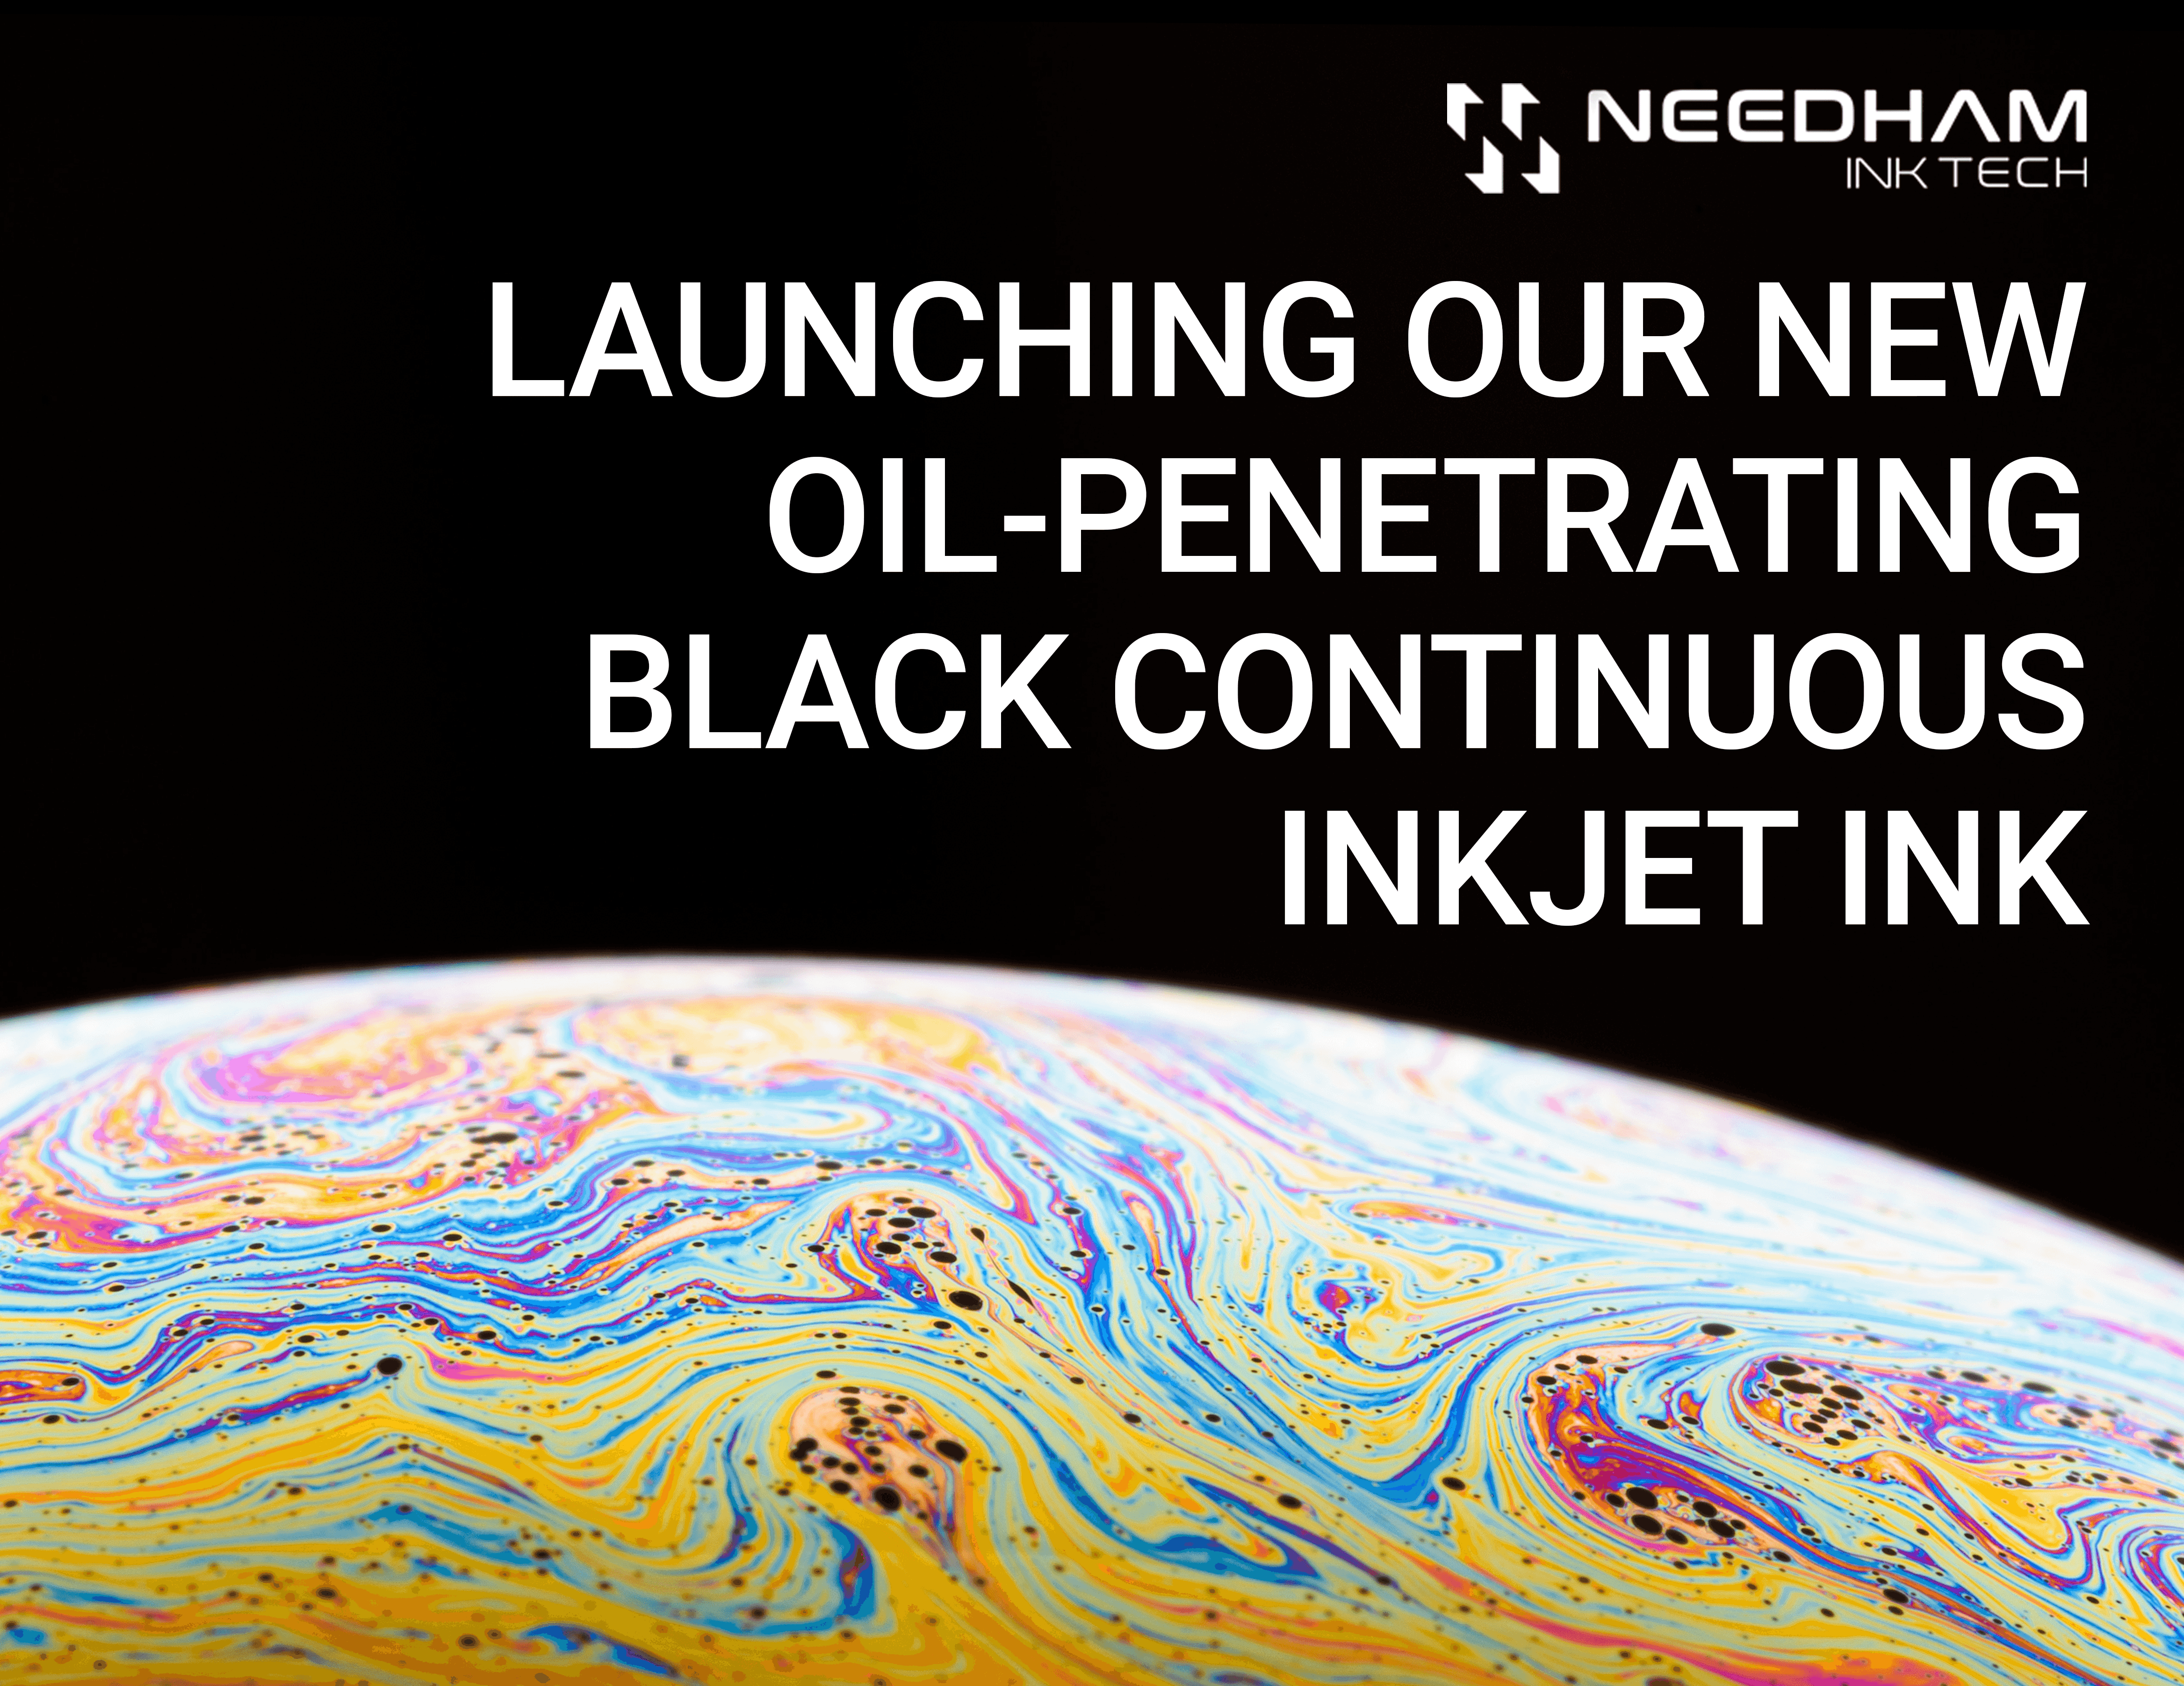 Needham Inks Introduces Oil-Penetrating Black CIJ Ink